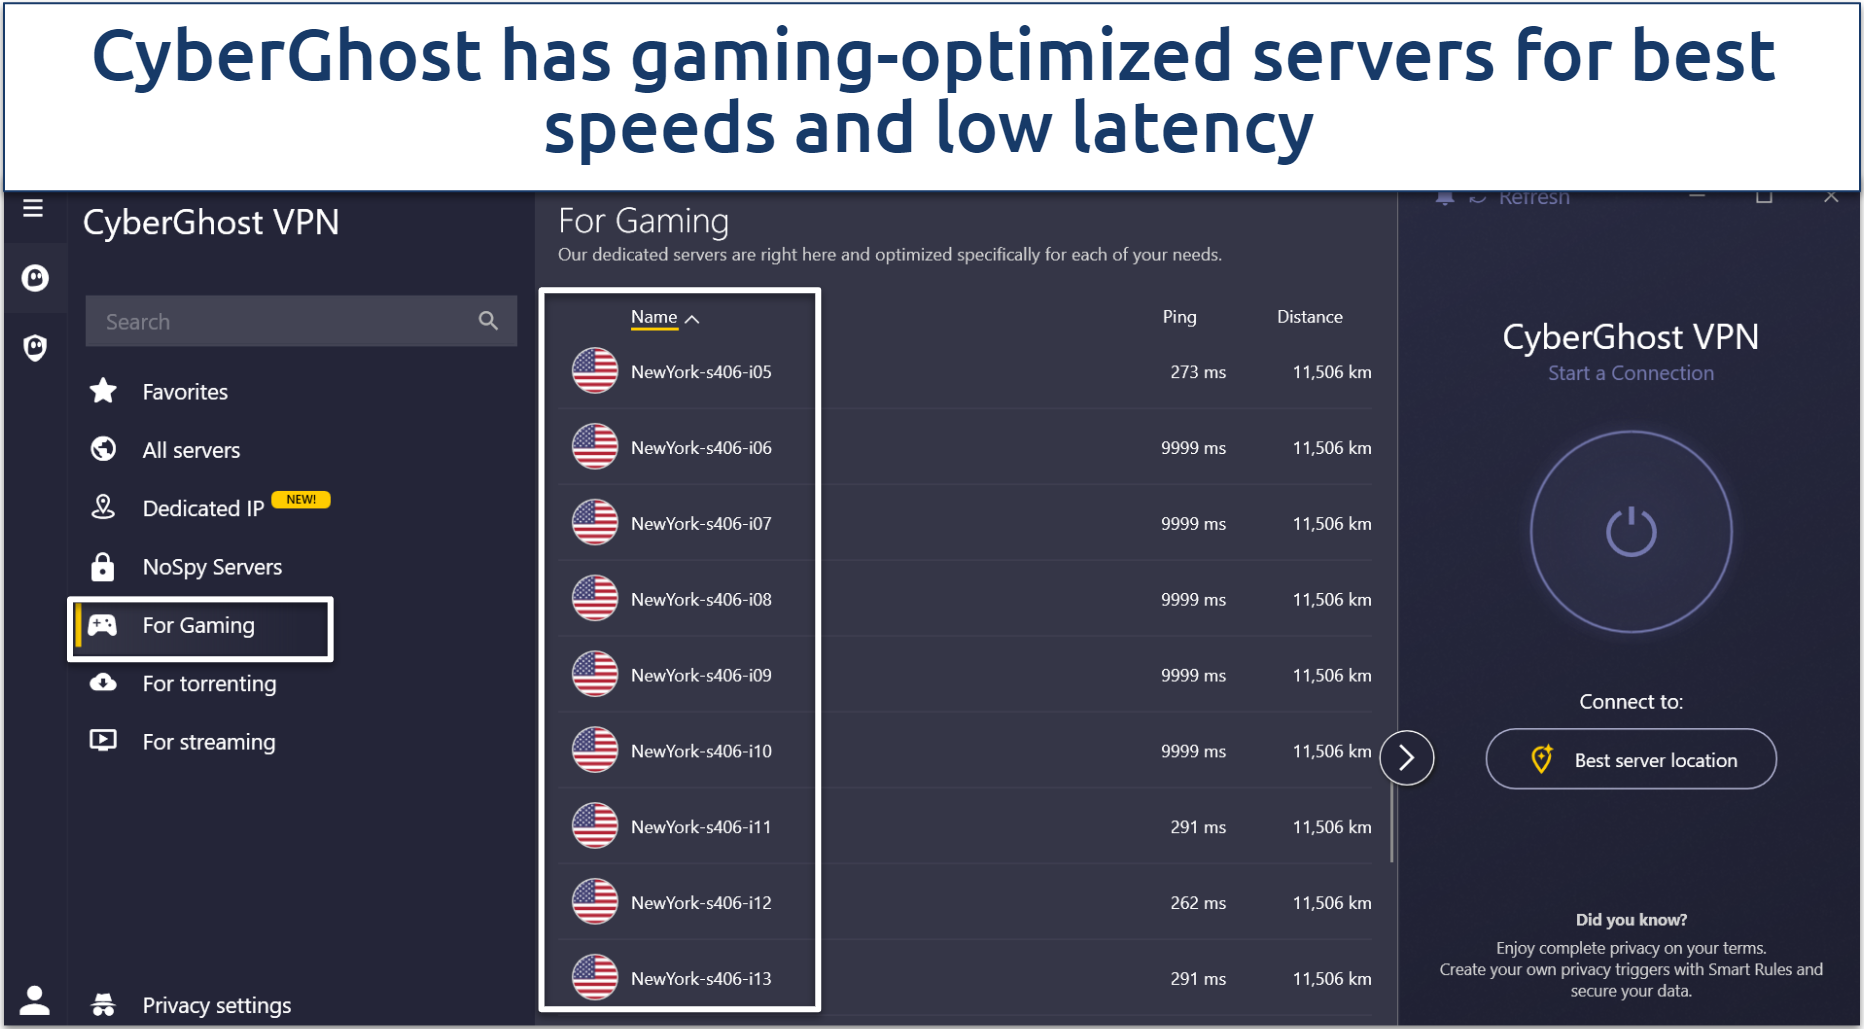 Screenshot of CyberGhost's gaming servers